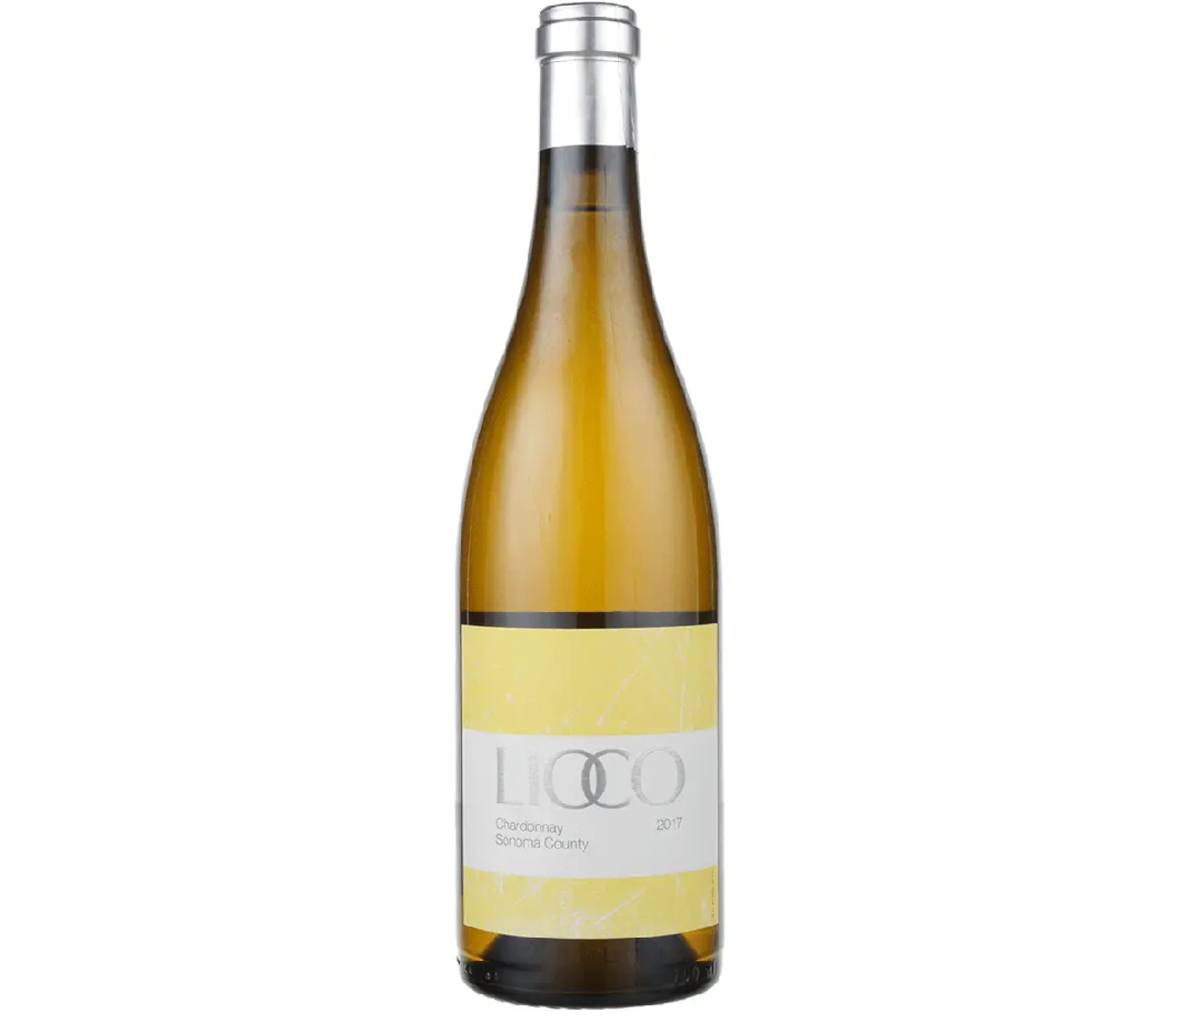 Bottle of LIOCO Sonoma County Chardonnay